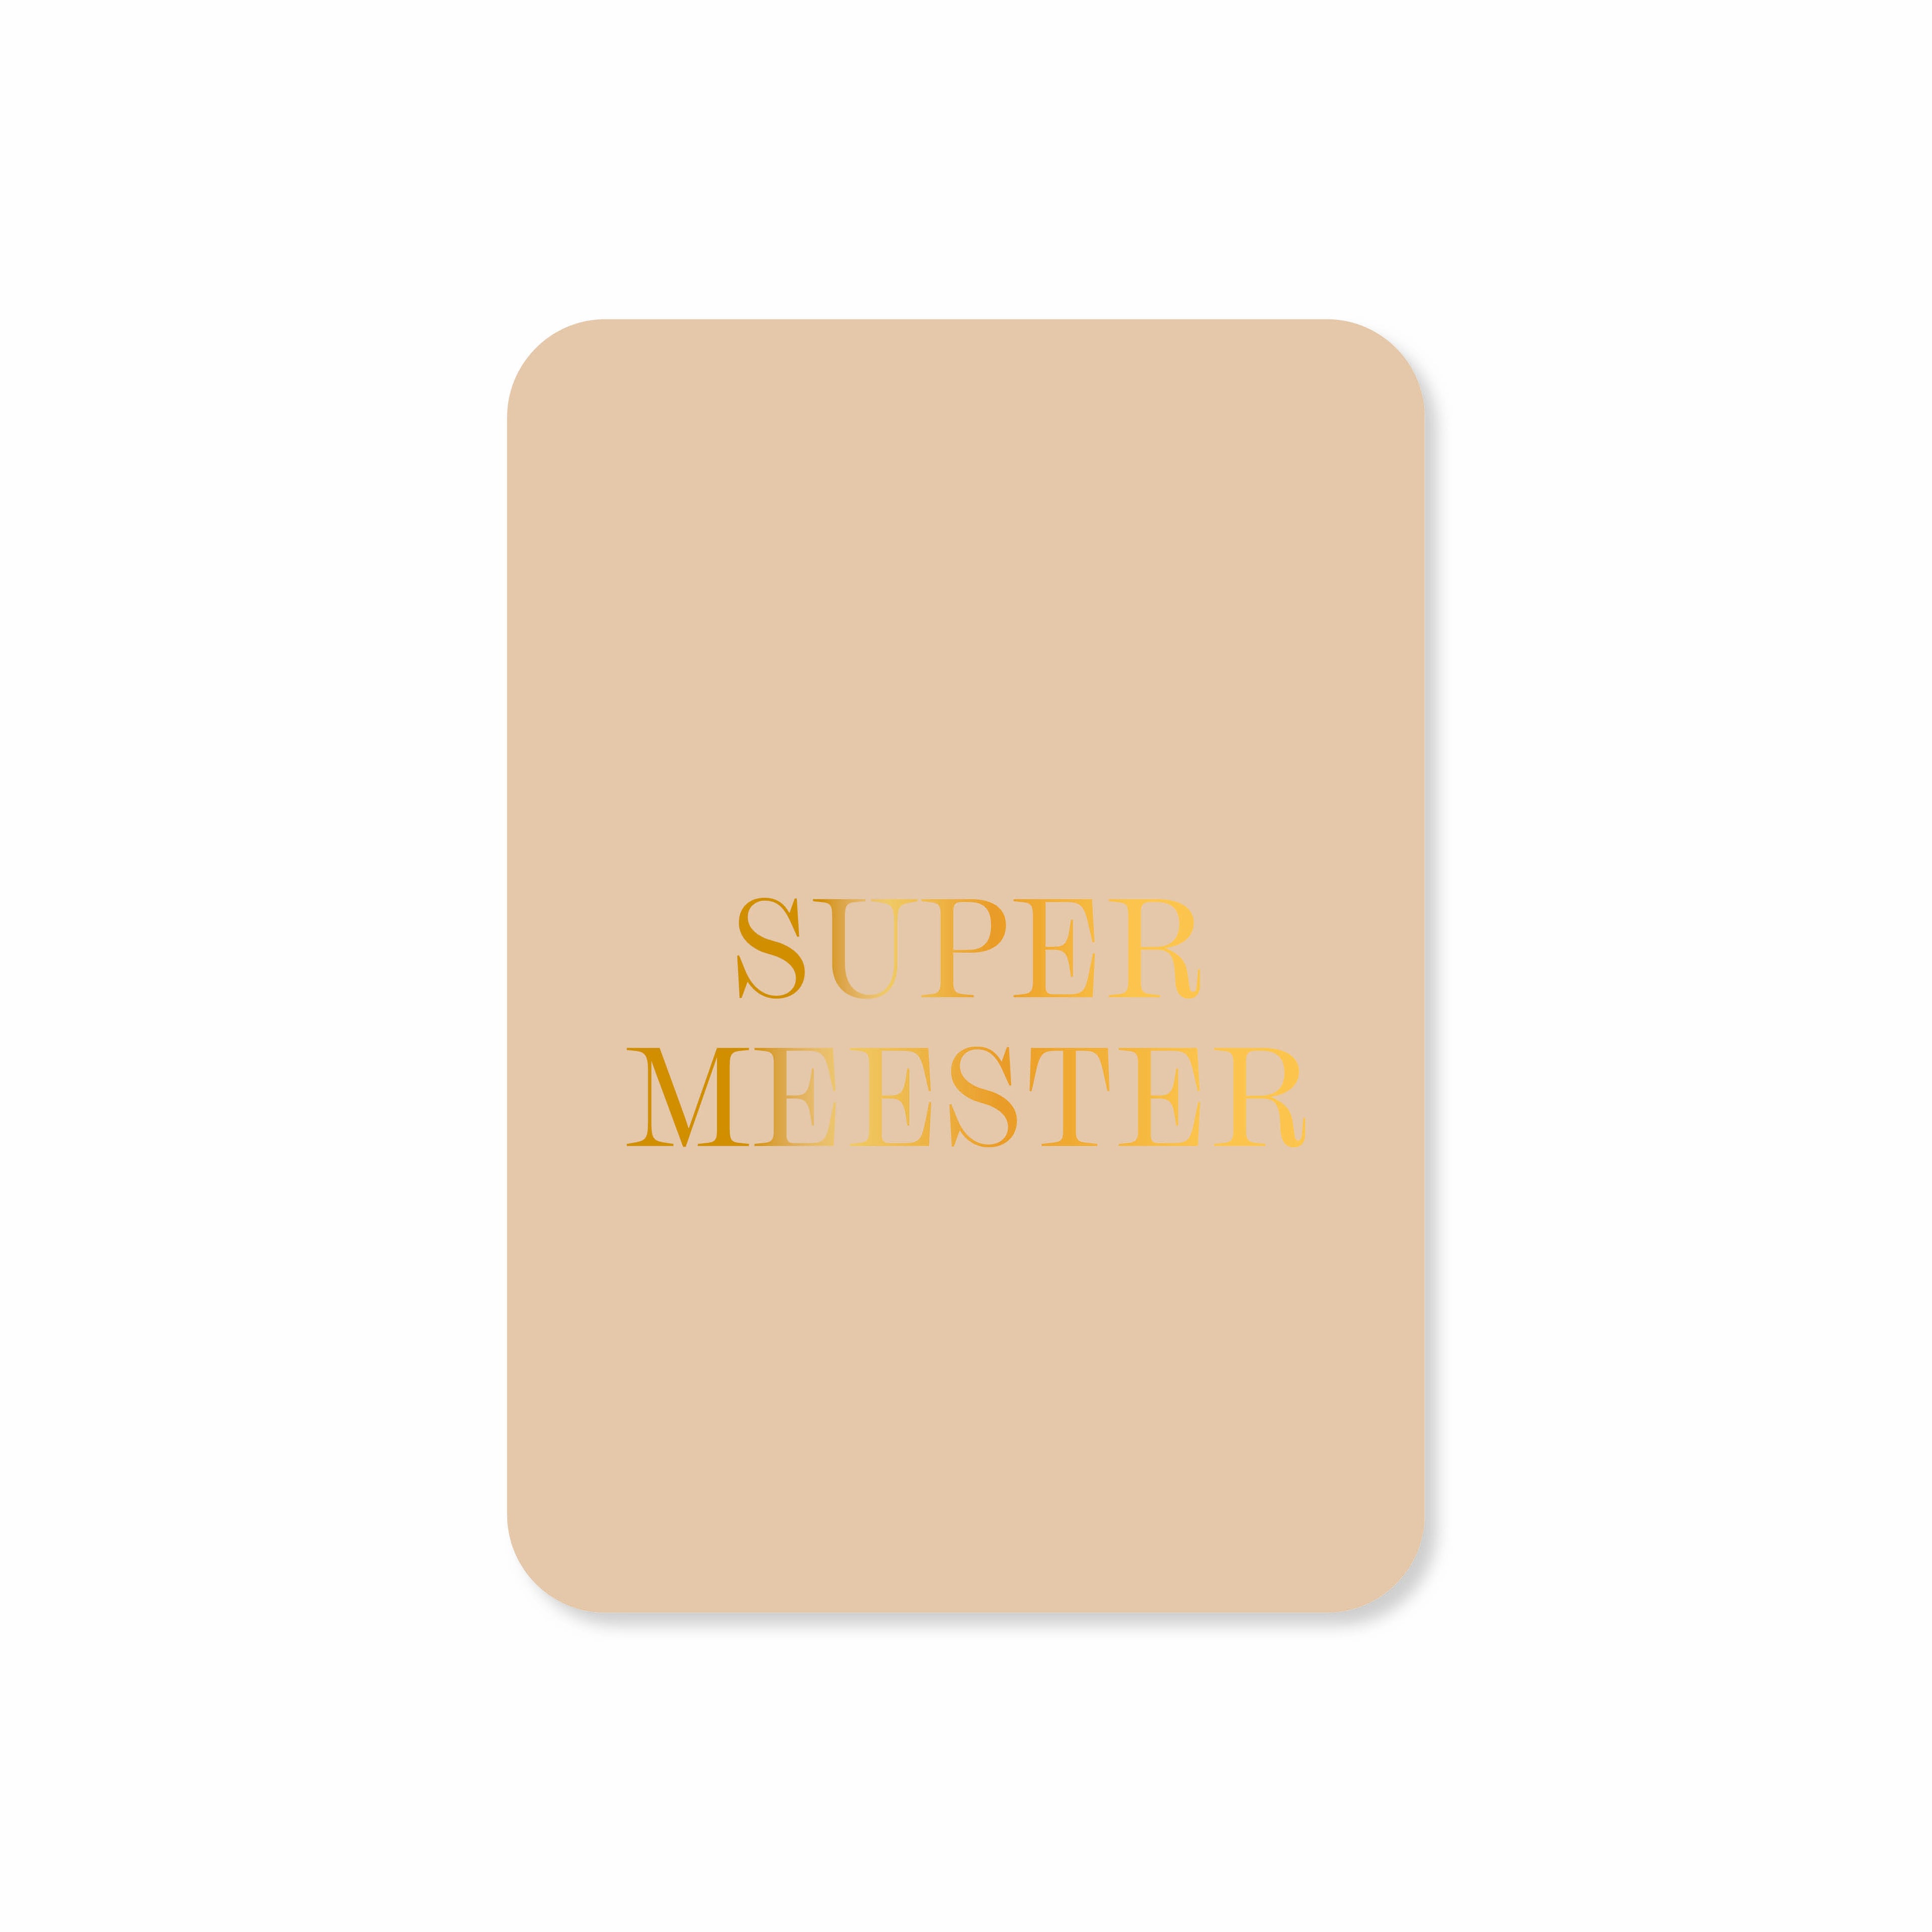 Minikaart Super meester (met goudfolie)